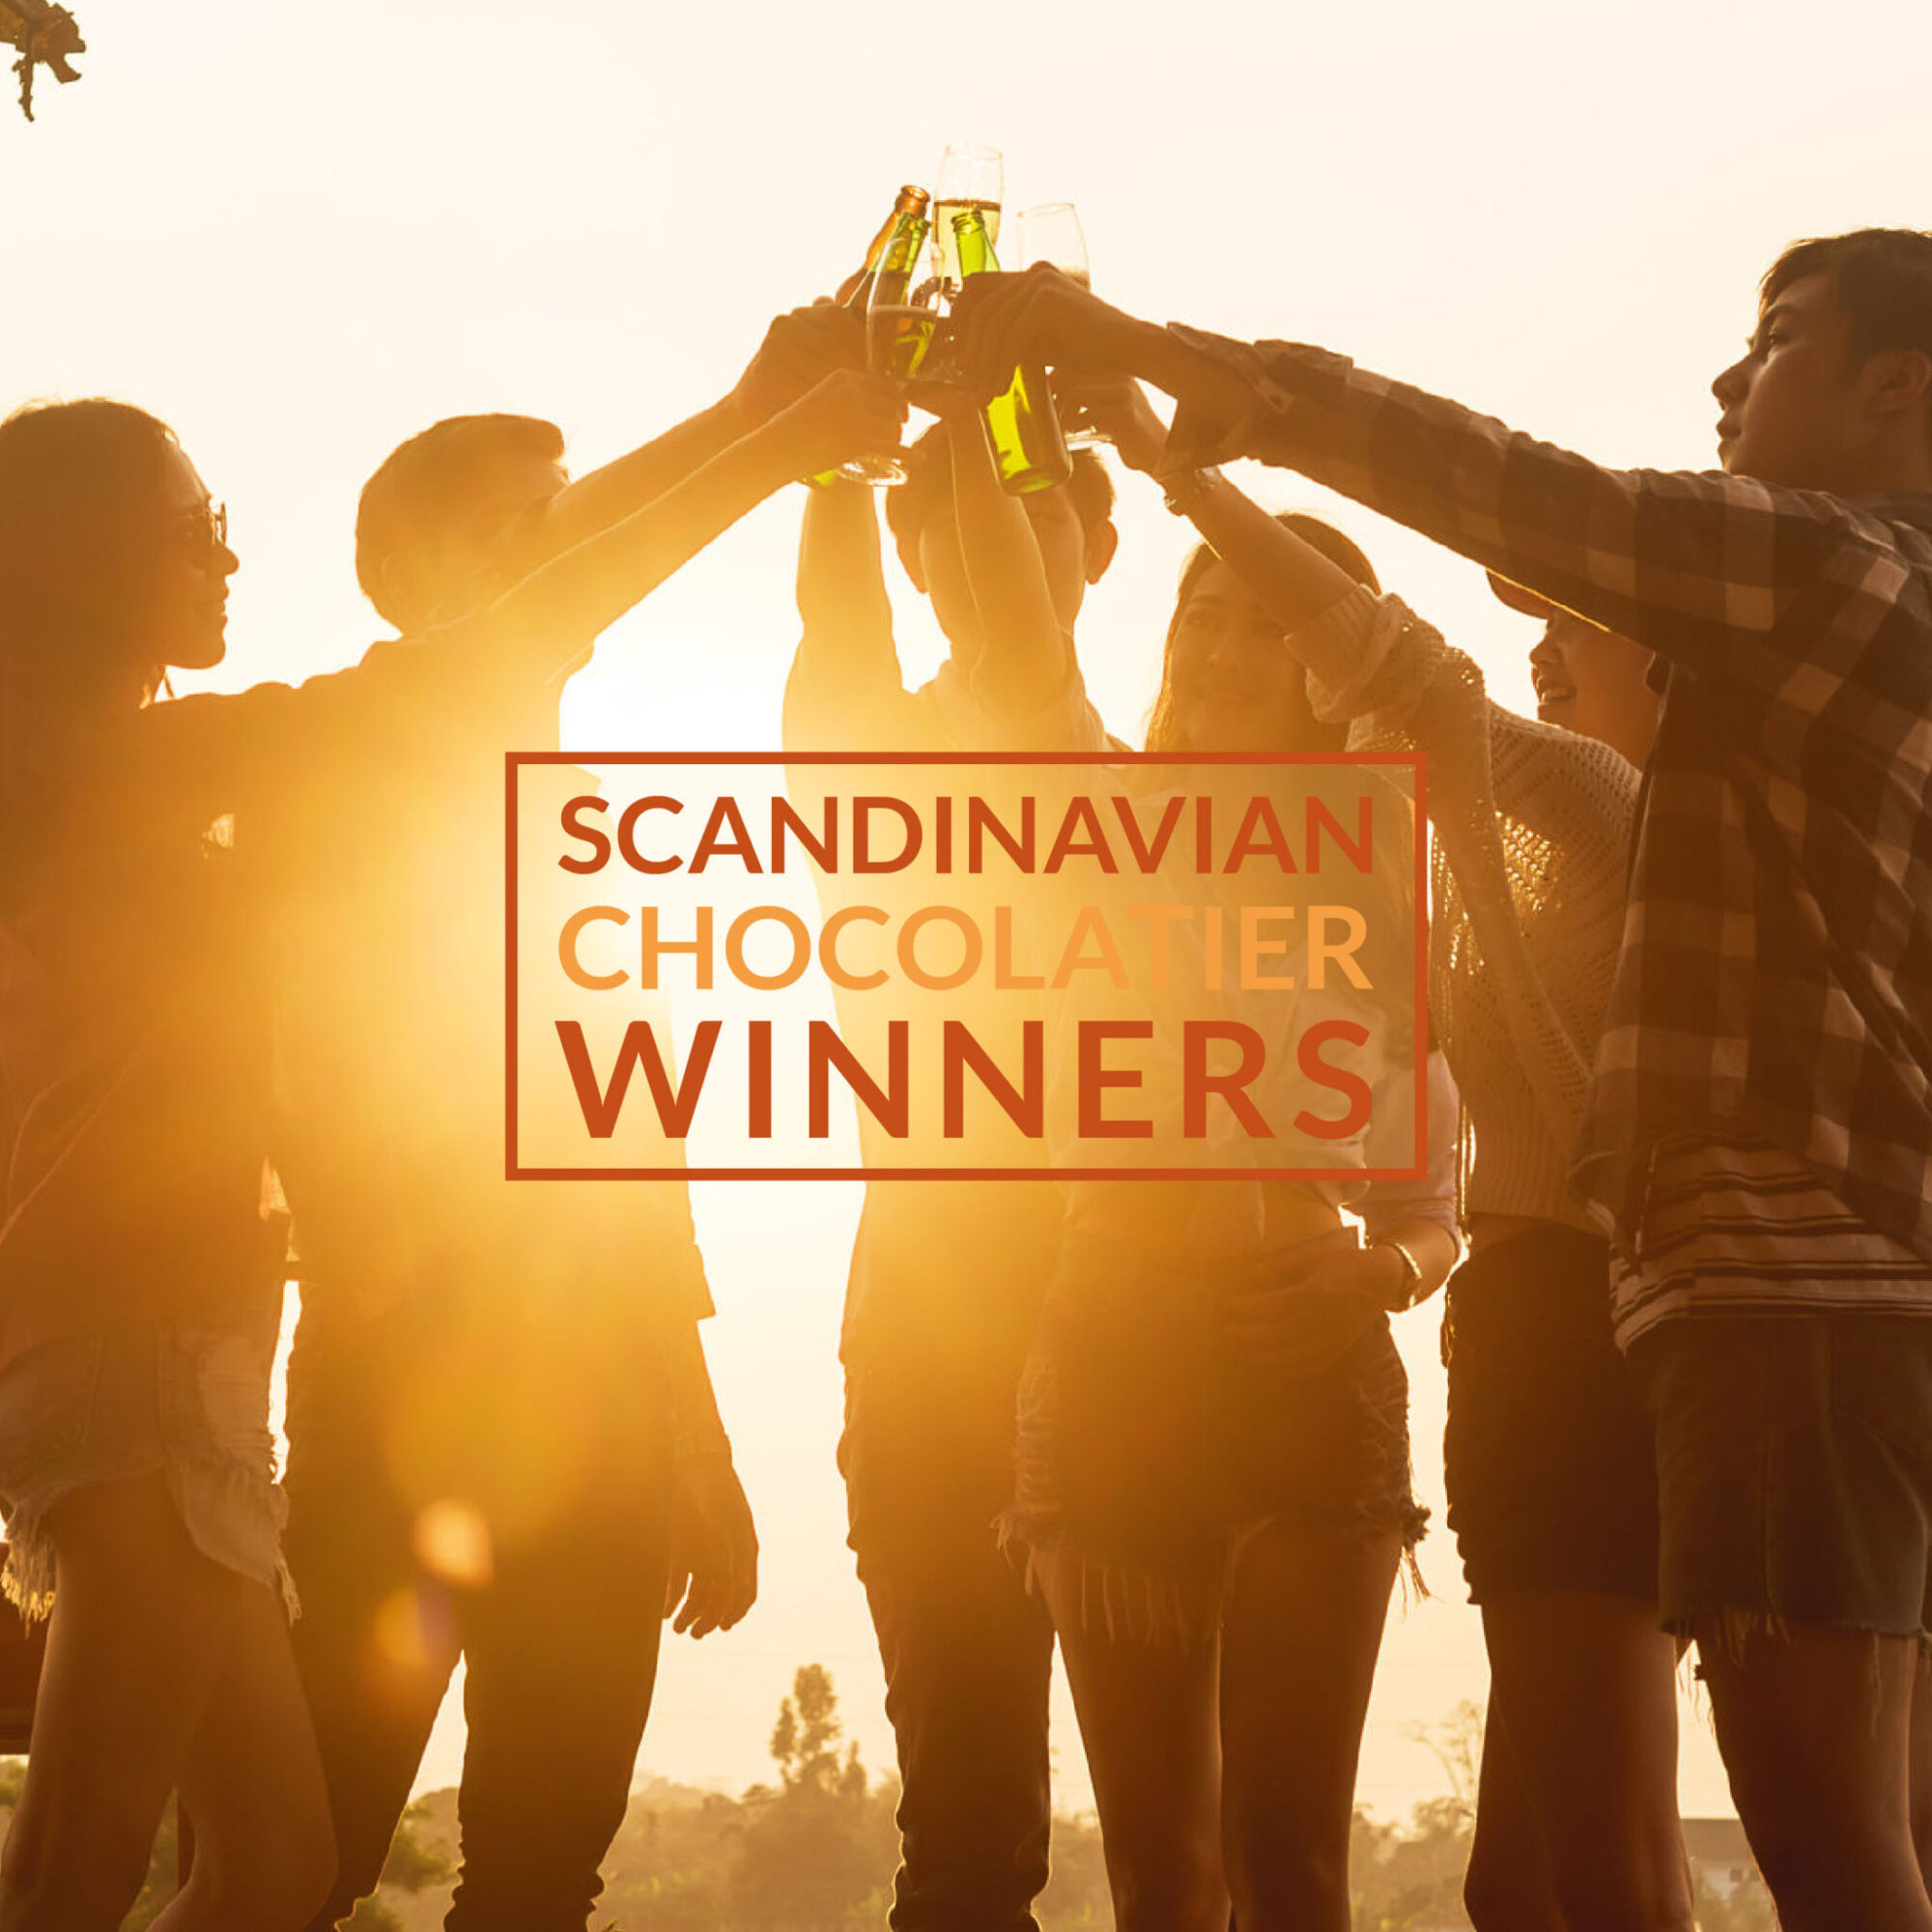 Scandi-winners-teaser2-2048x2048